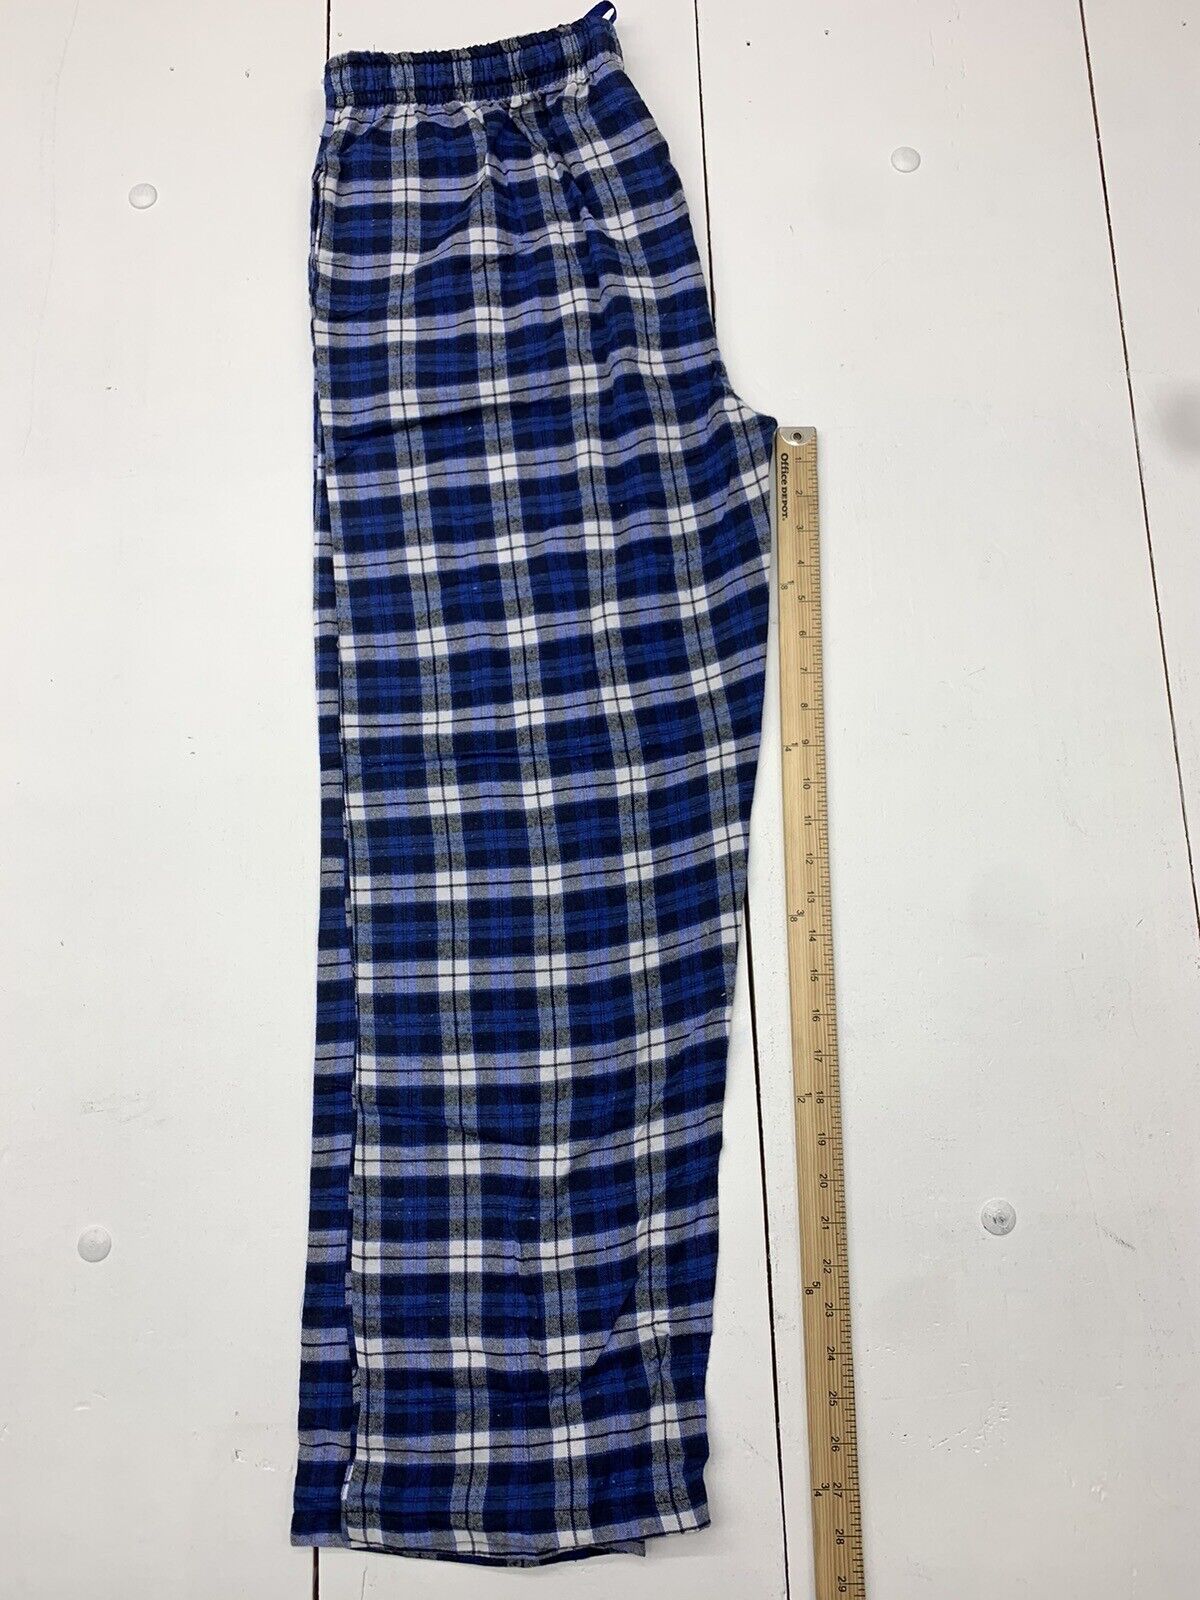 Real Essentials Mens Blue Plaid Pajama Pants Size Large - beyond exchange